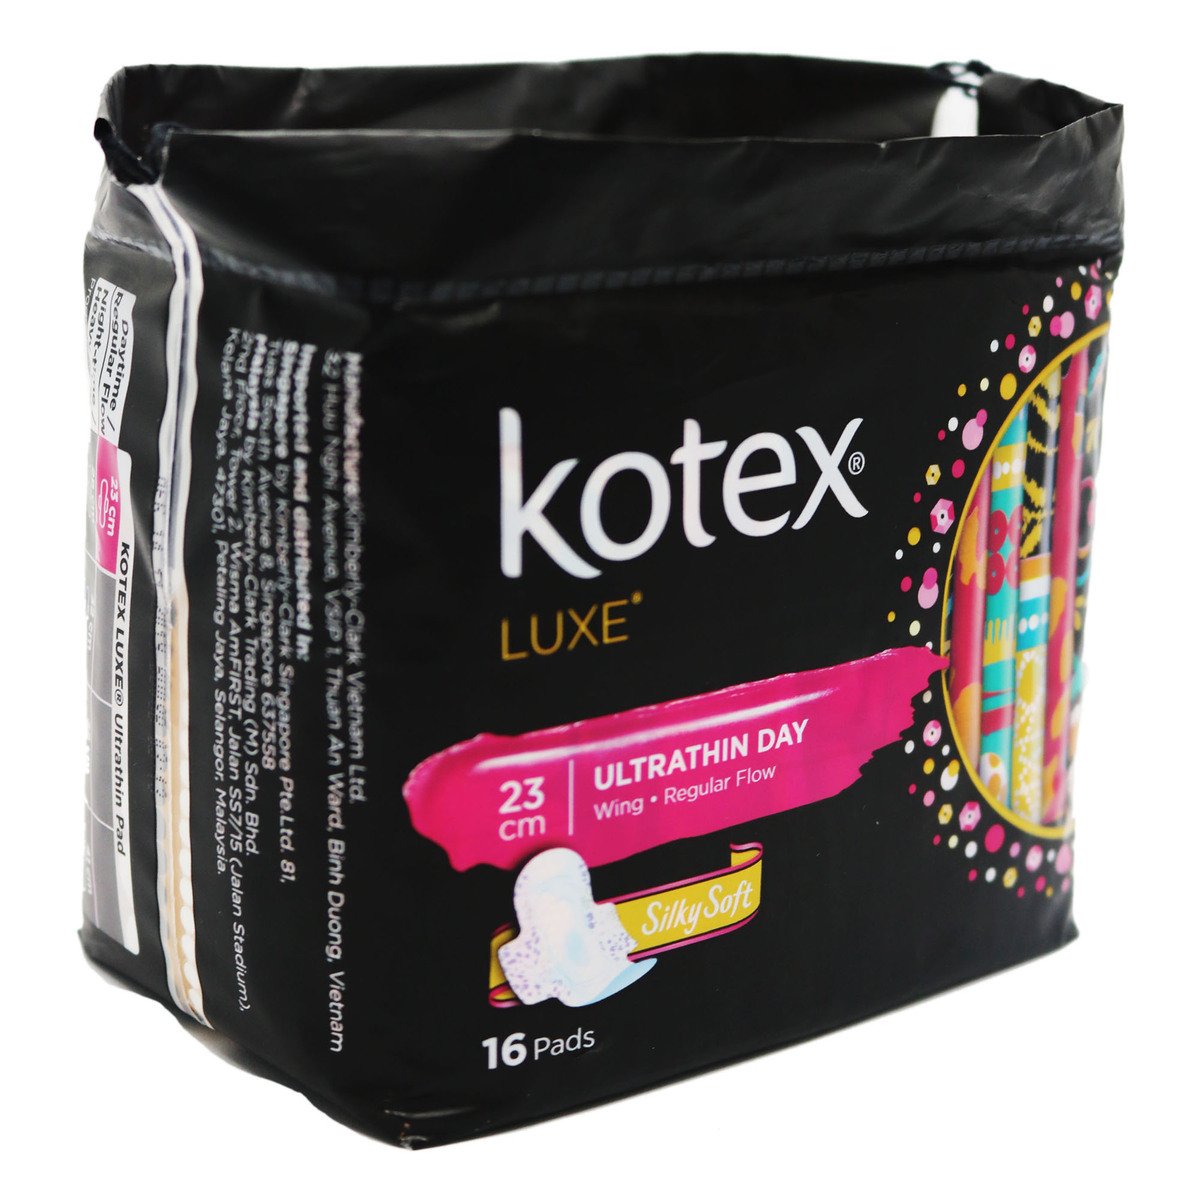 Kotex Luxe Ultrathin 23Cm 16 Counts